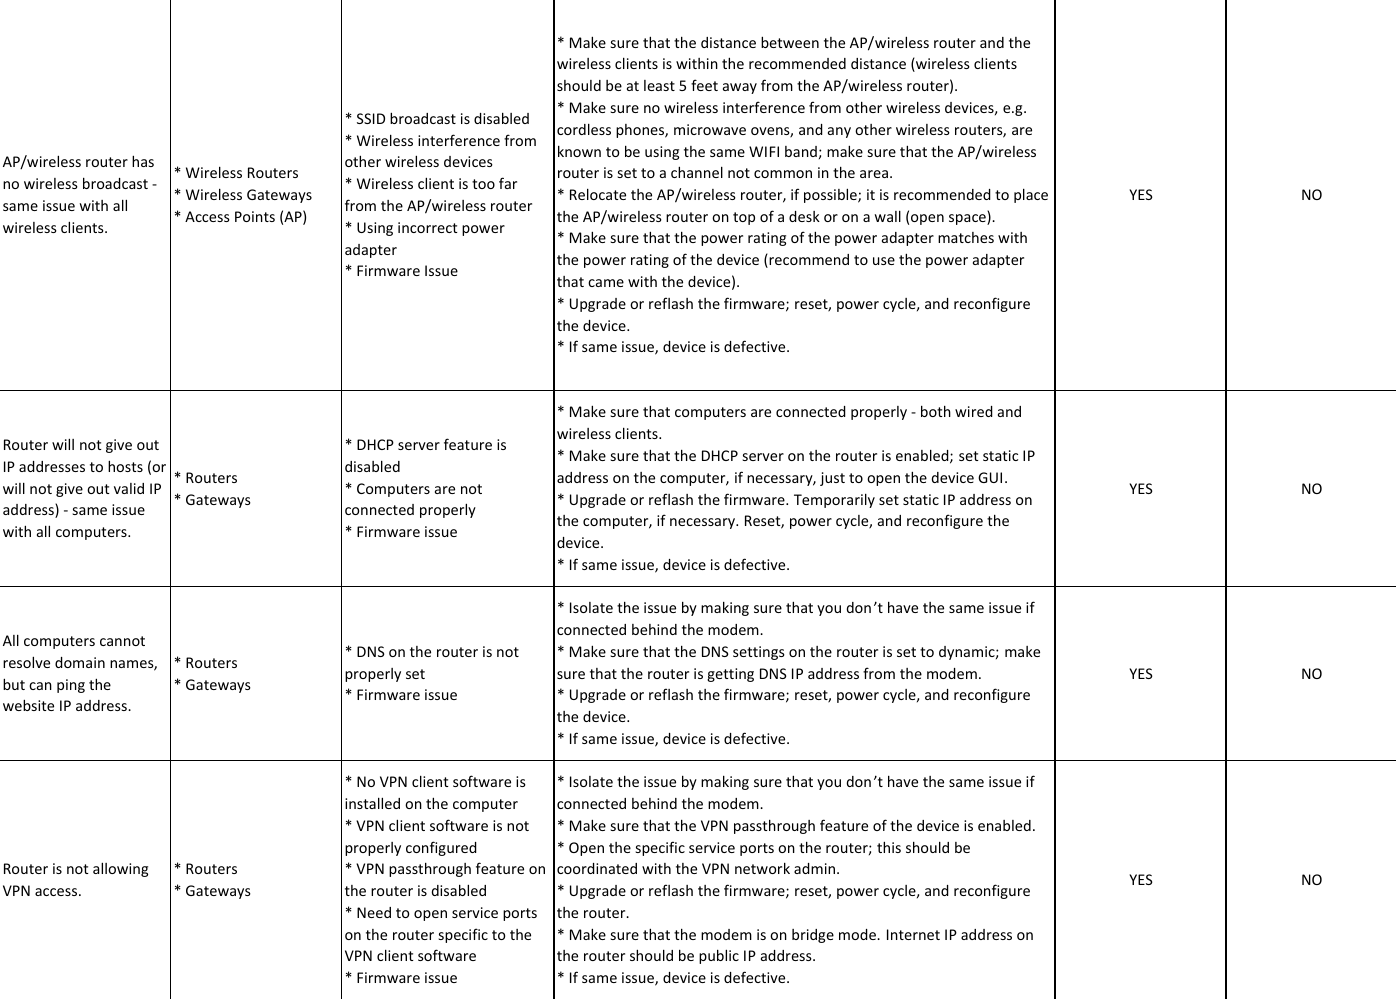 Page 8 of 11 - LInksys RMA Checklistx  22. L1 Checklist